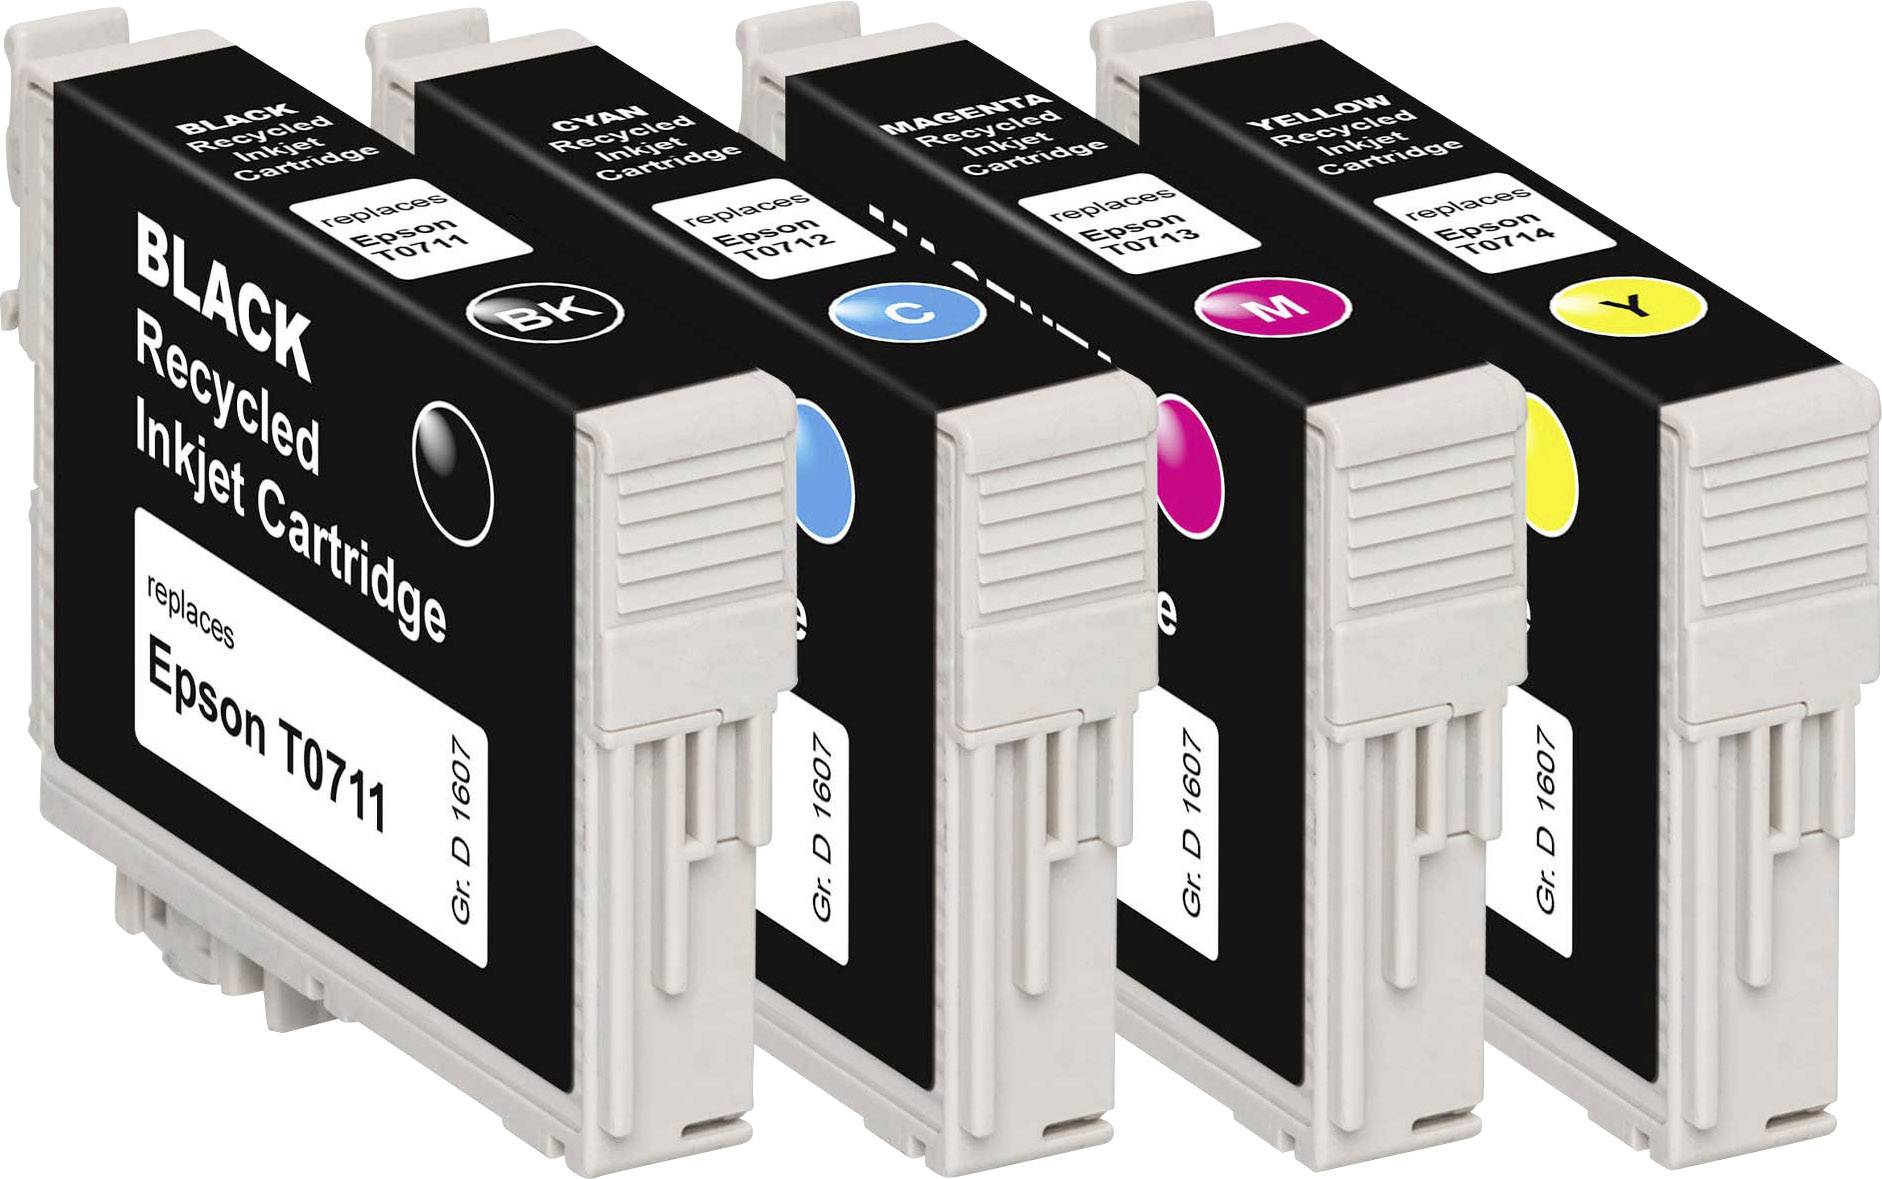 CONRAD Basetech Tinte ersetzt Epson T0711, T0712, T0713, T0714 Kompatibel Kombi-Pack Schwarz